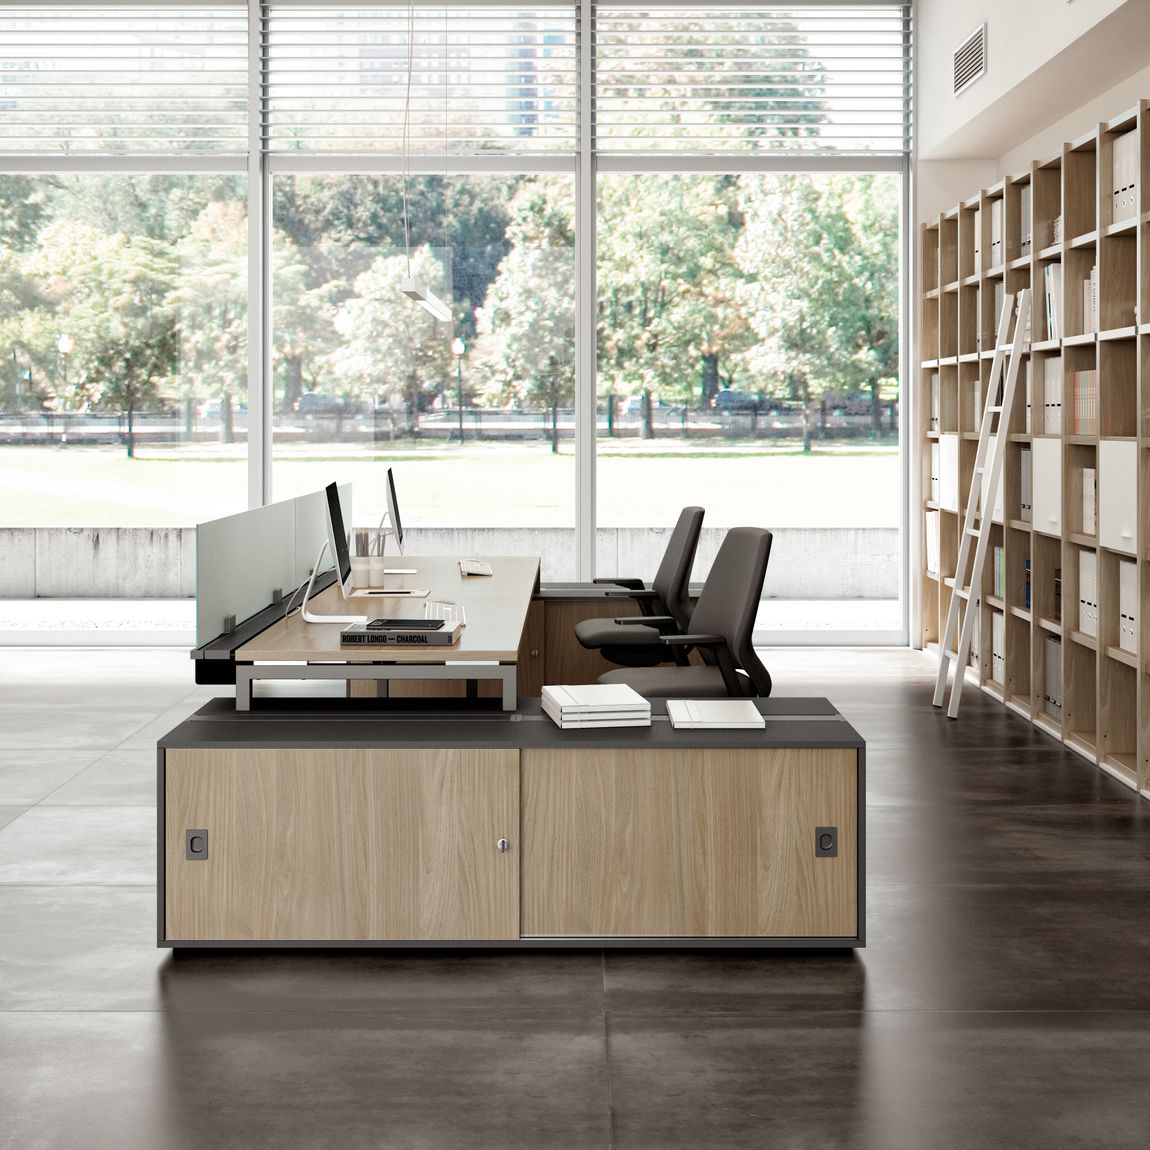 Modern Executive Office Desks | Commercial Office Desks